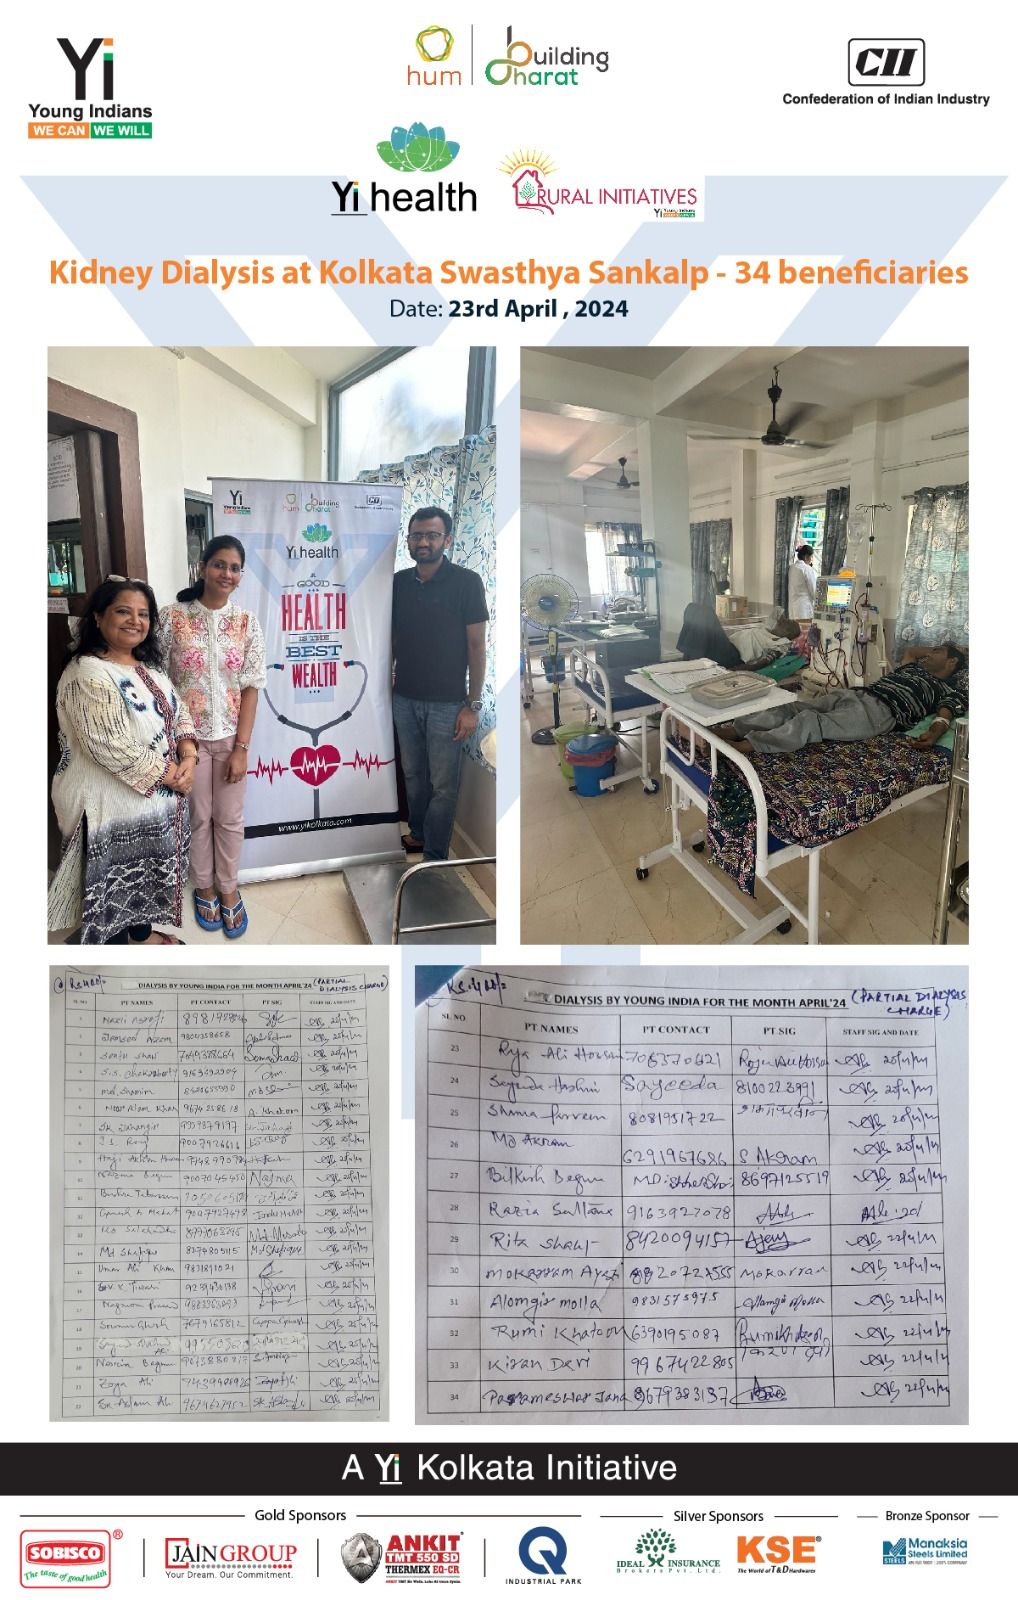 Yi24 | Health - Kidney Dialysis at Kolkata Swasthya Sankalp